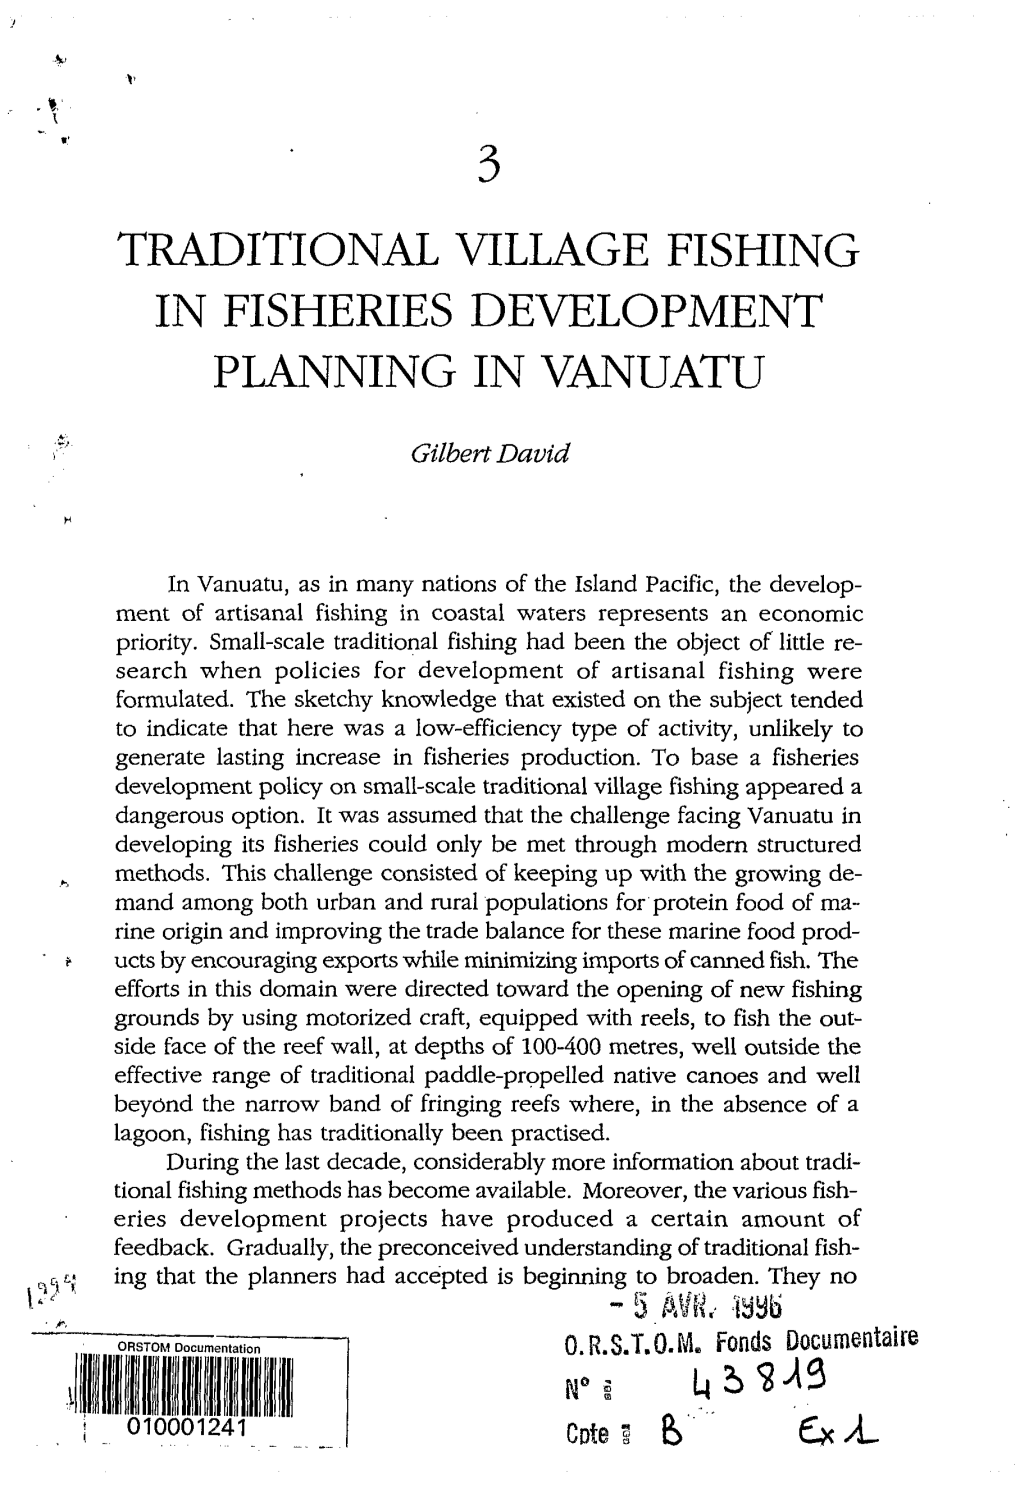 Traditional Village Fishing in Fisheries Development Planning in Vanuatu